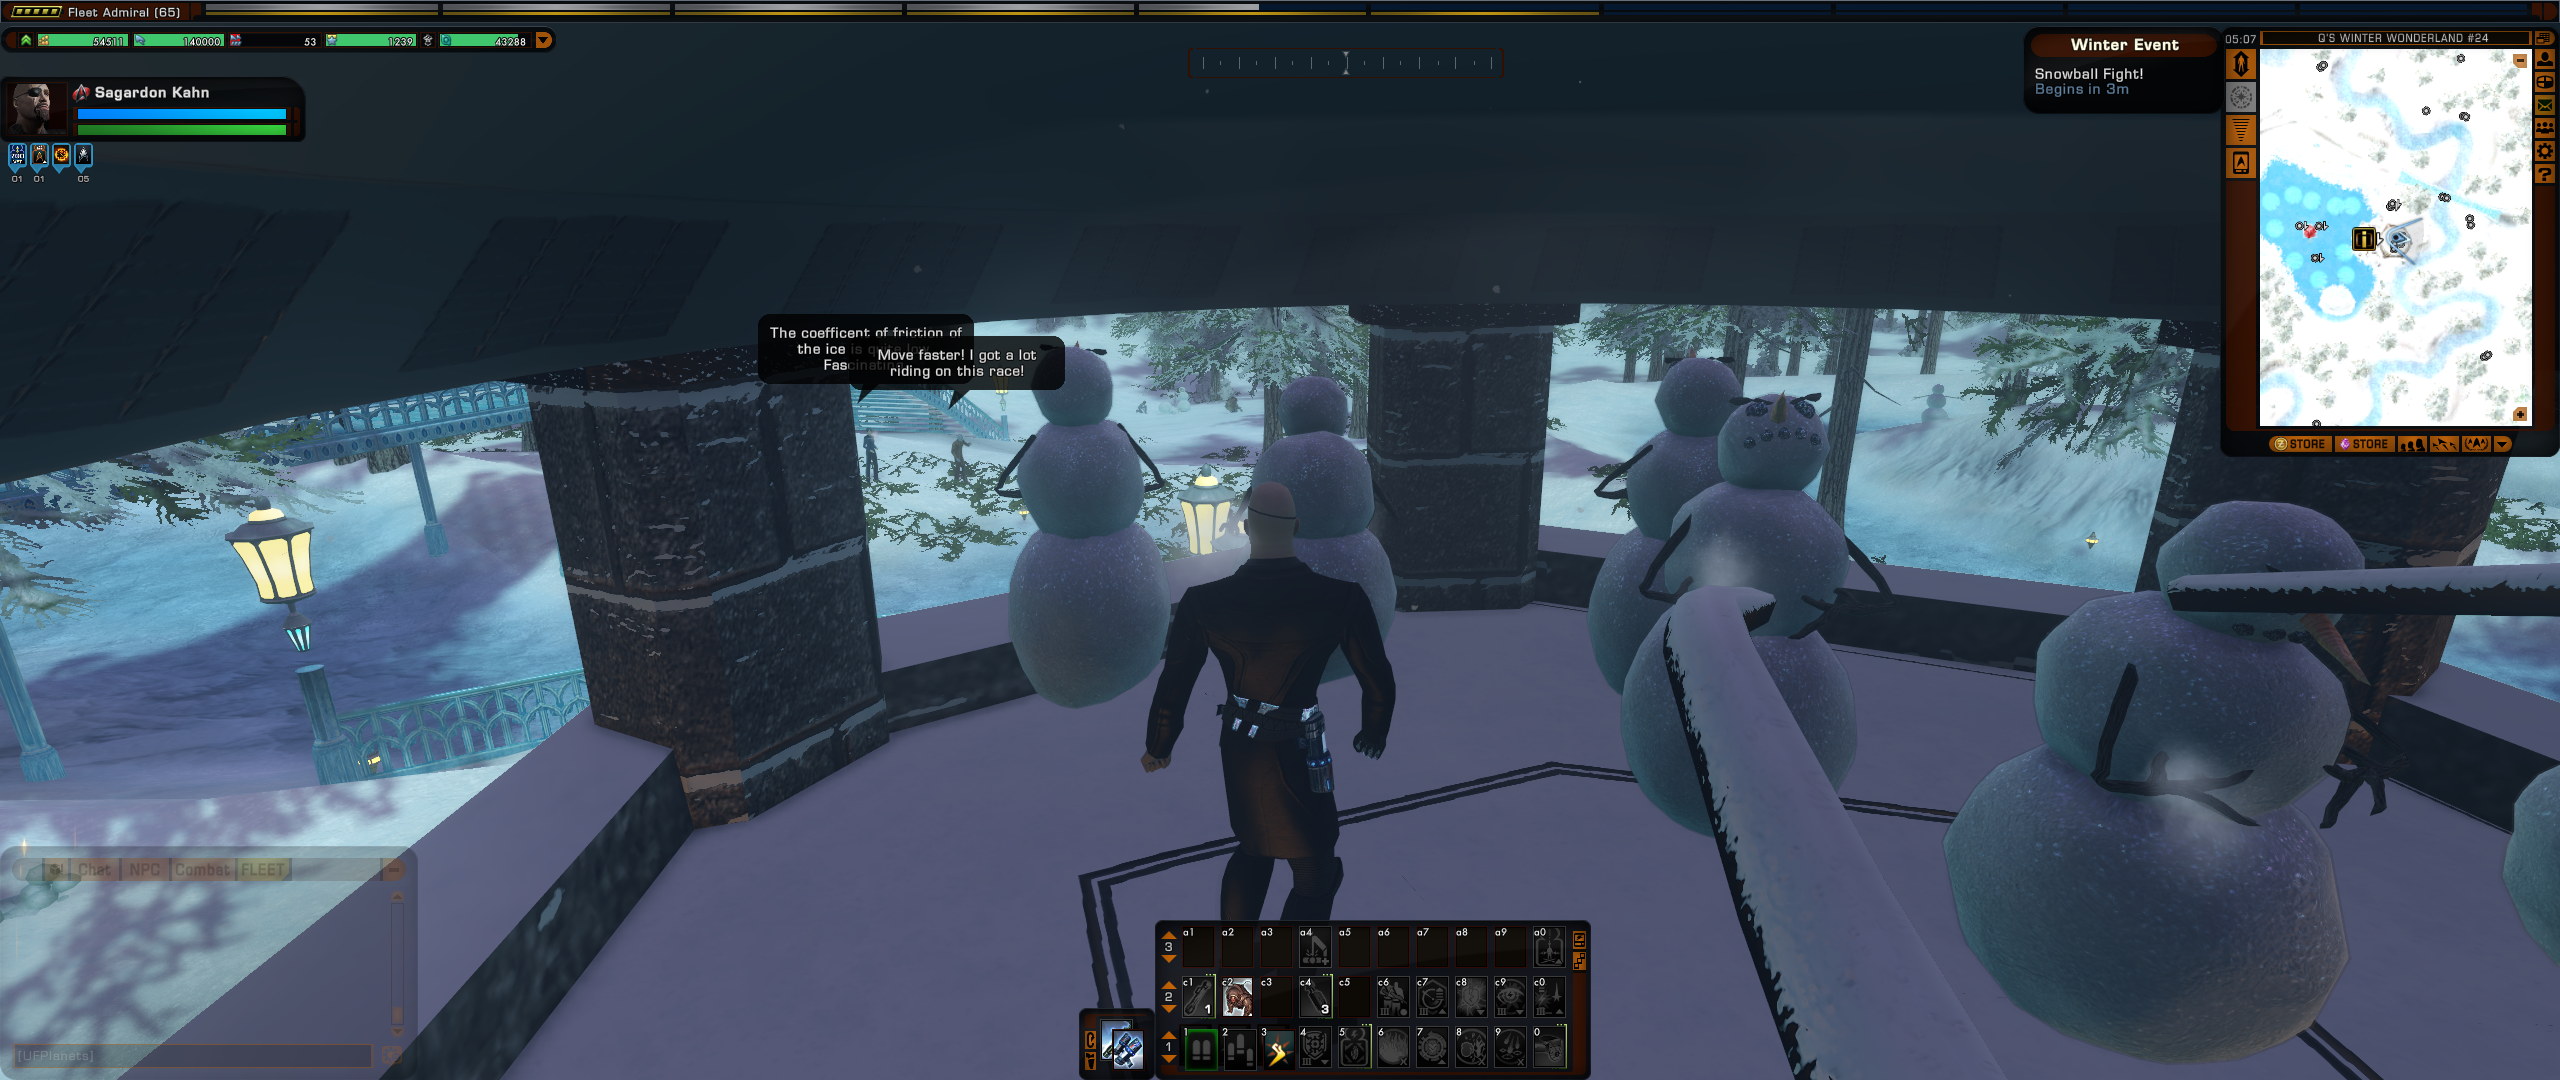 Somehow I got stuck in Snowman prison when rejoining my fleet friends :P